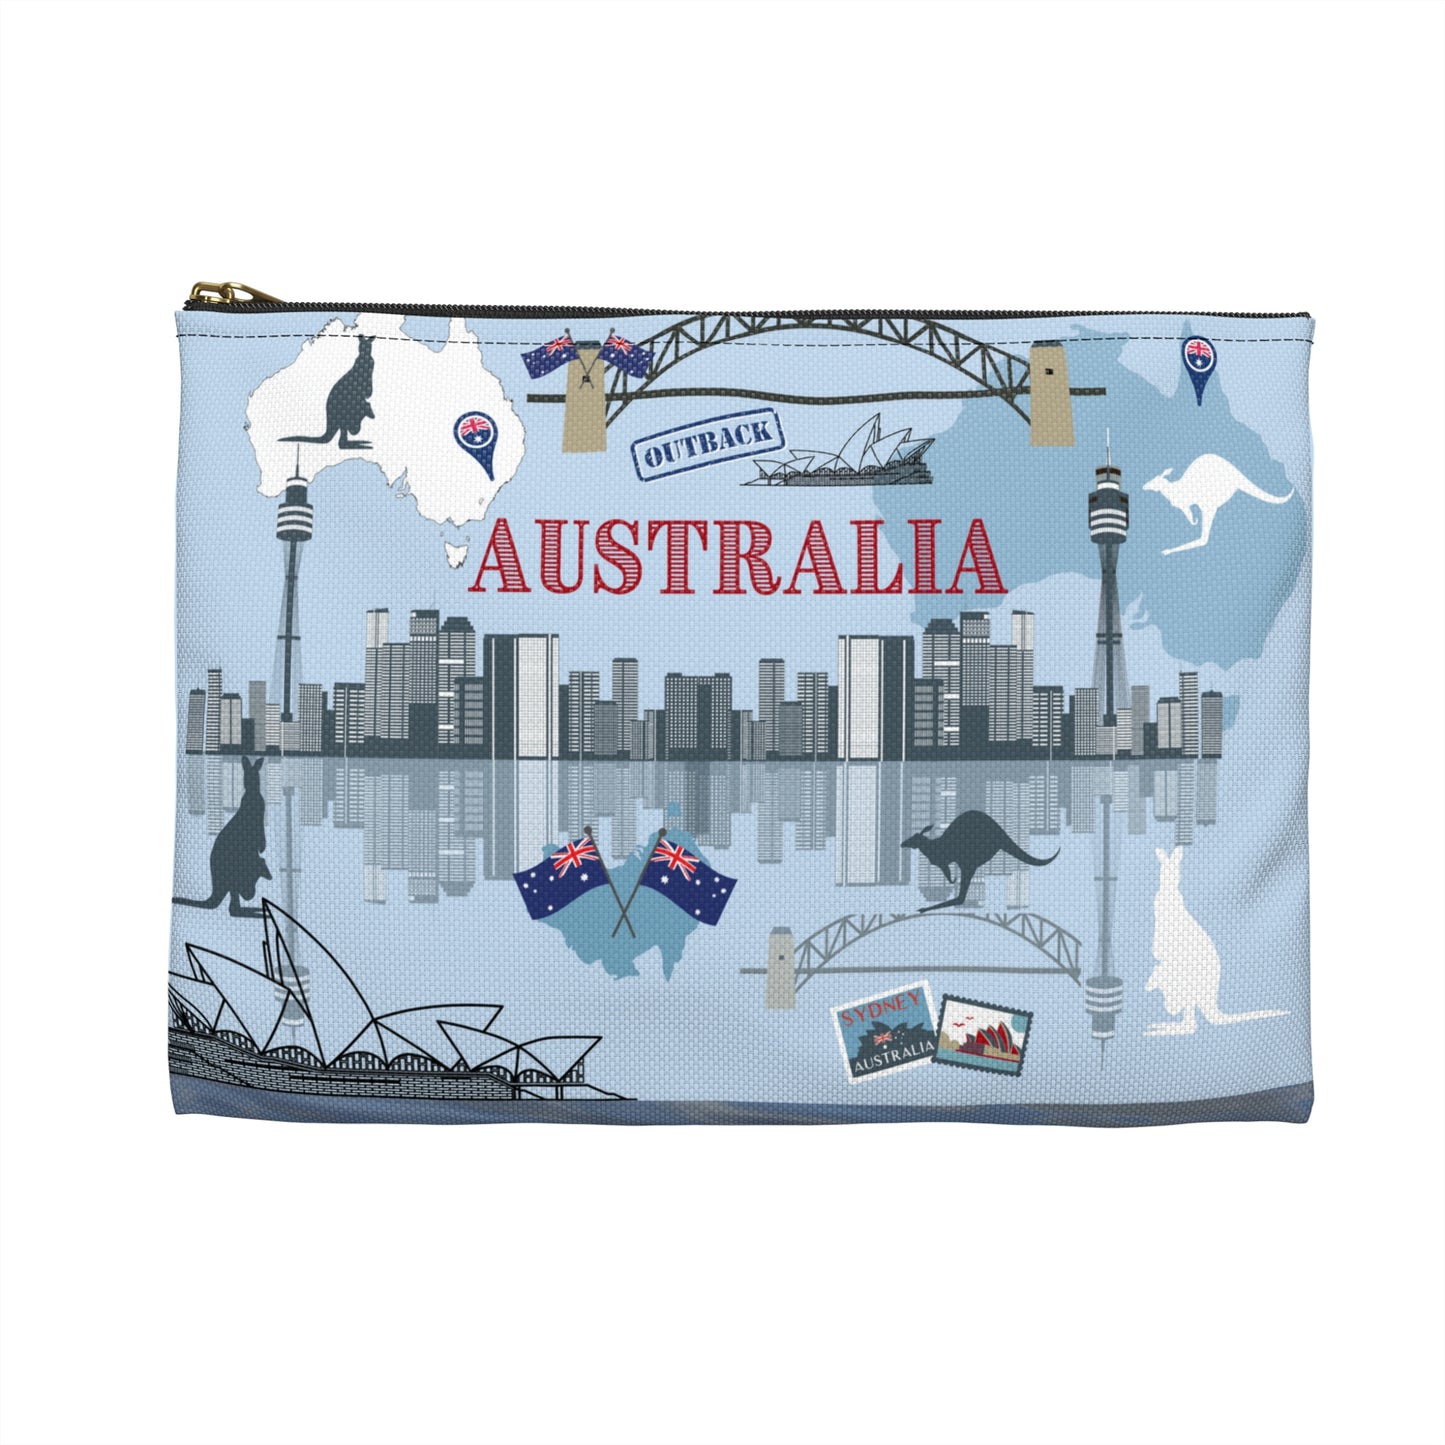 Australia Accessory Pouch, Down Under Bag